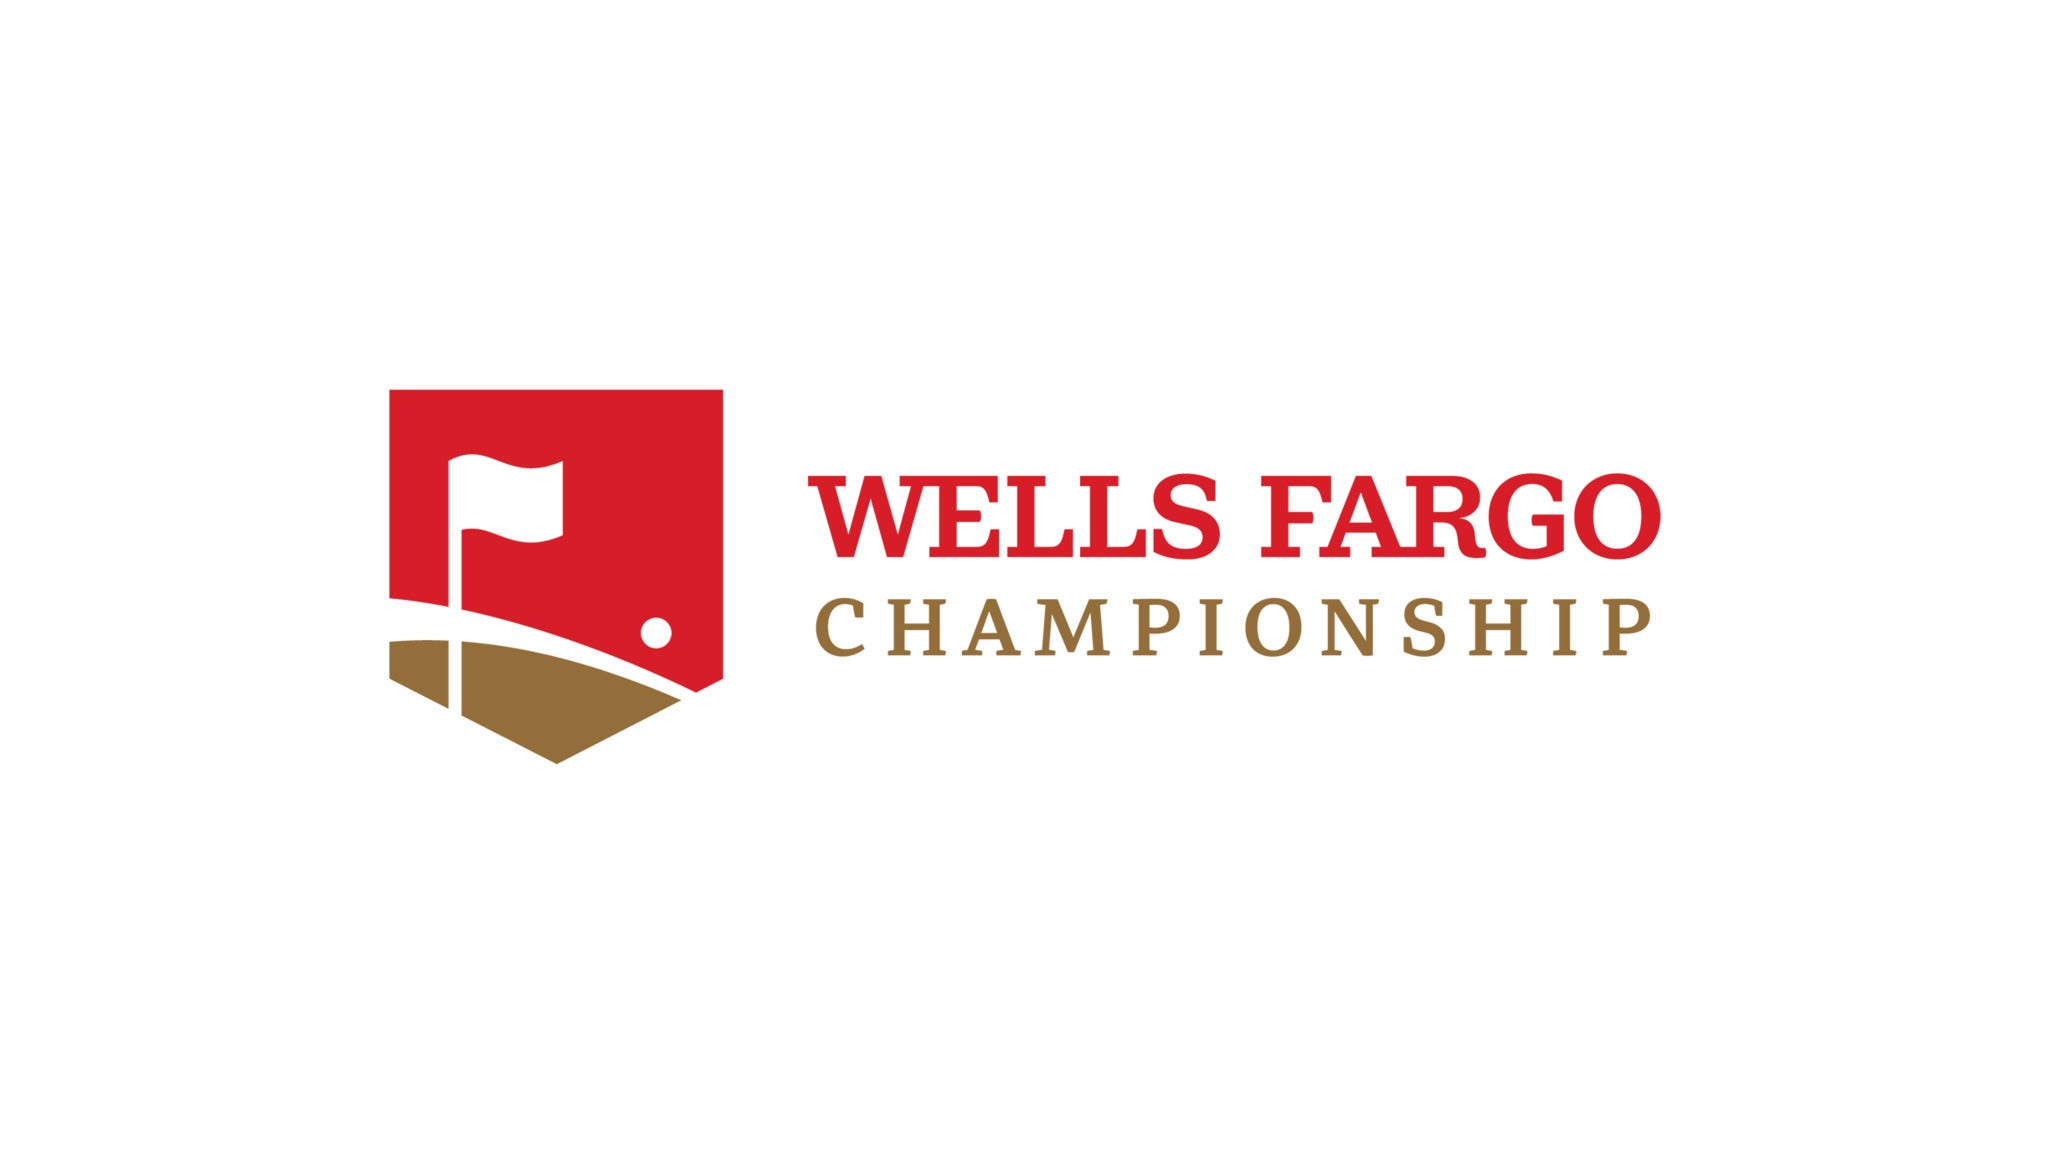 Wednesday Wells Fargo Championship in Potomac promo photo for Wells Fargo Championship presale offer code